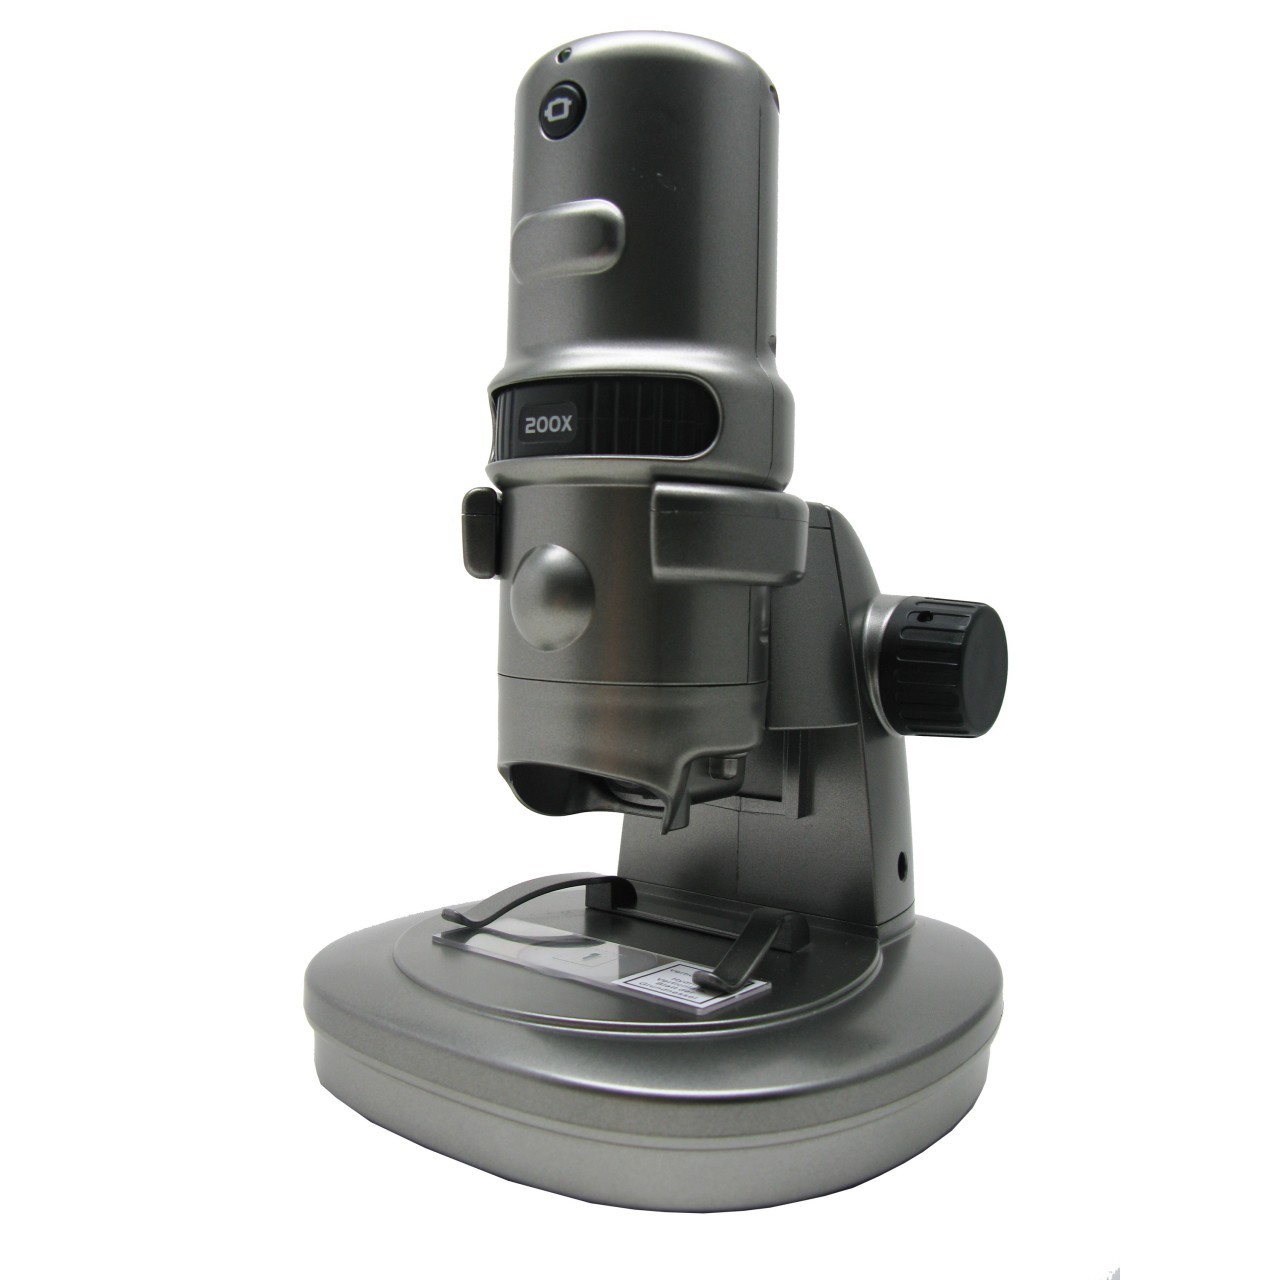 digital blue qx5 microscope software